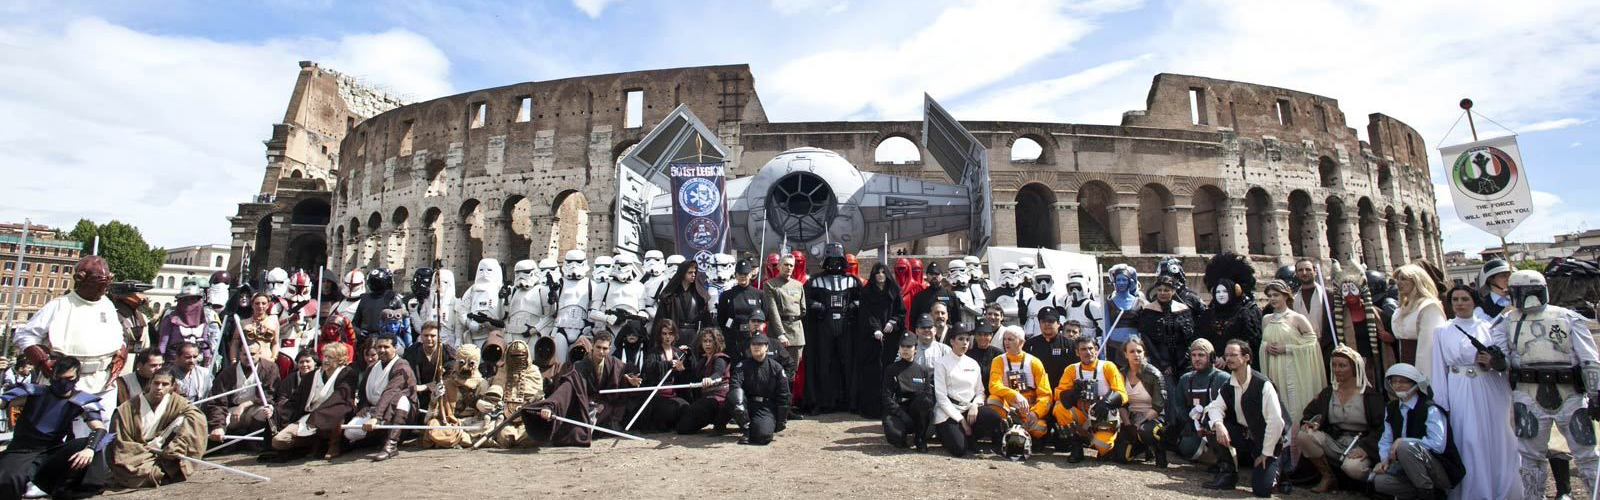 Star Wars Day Roma 2014